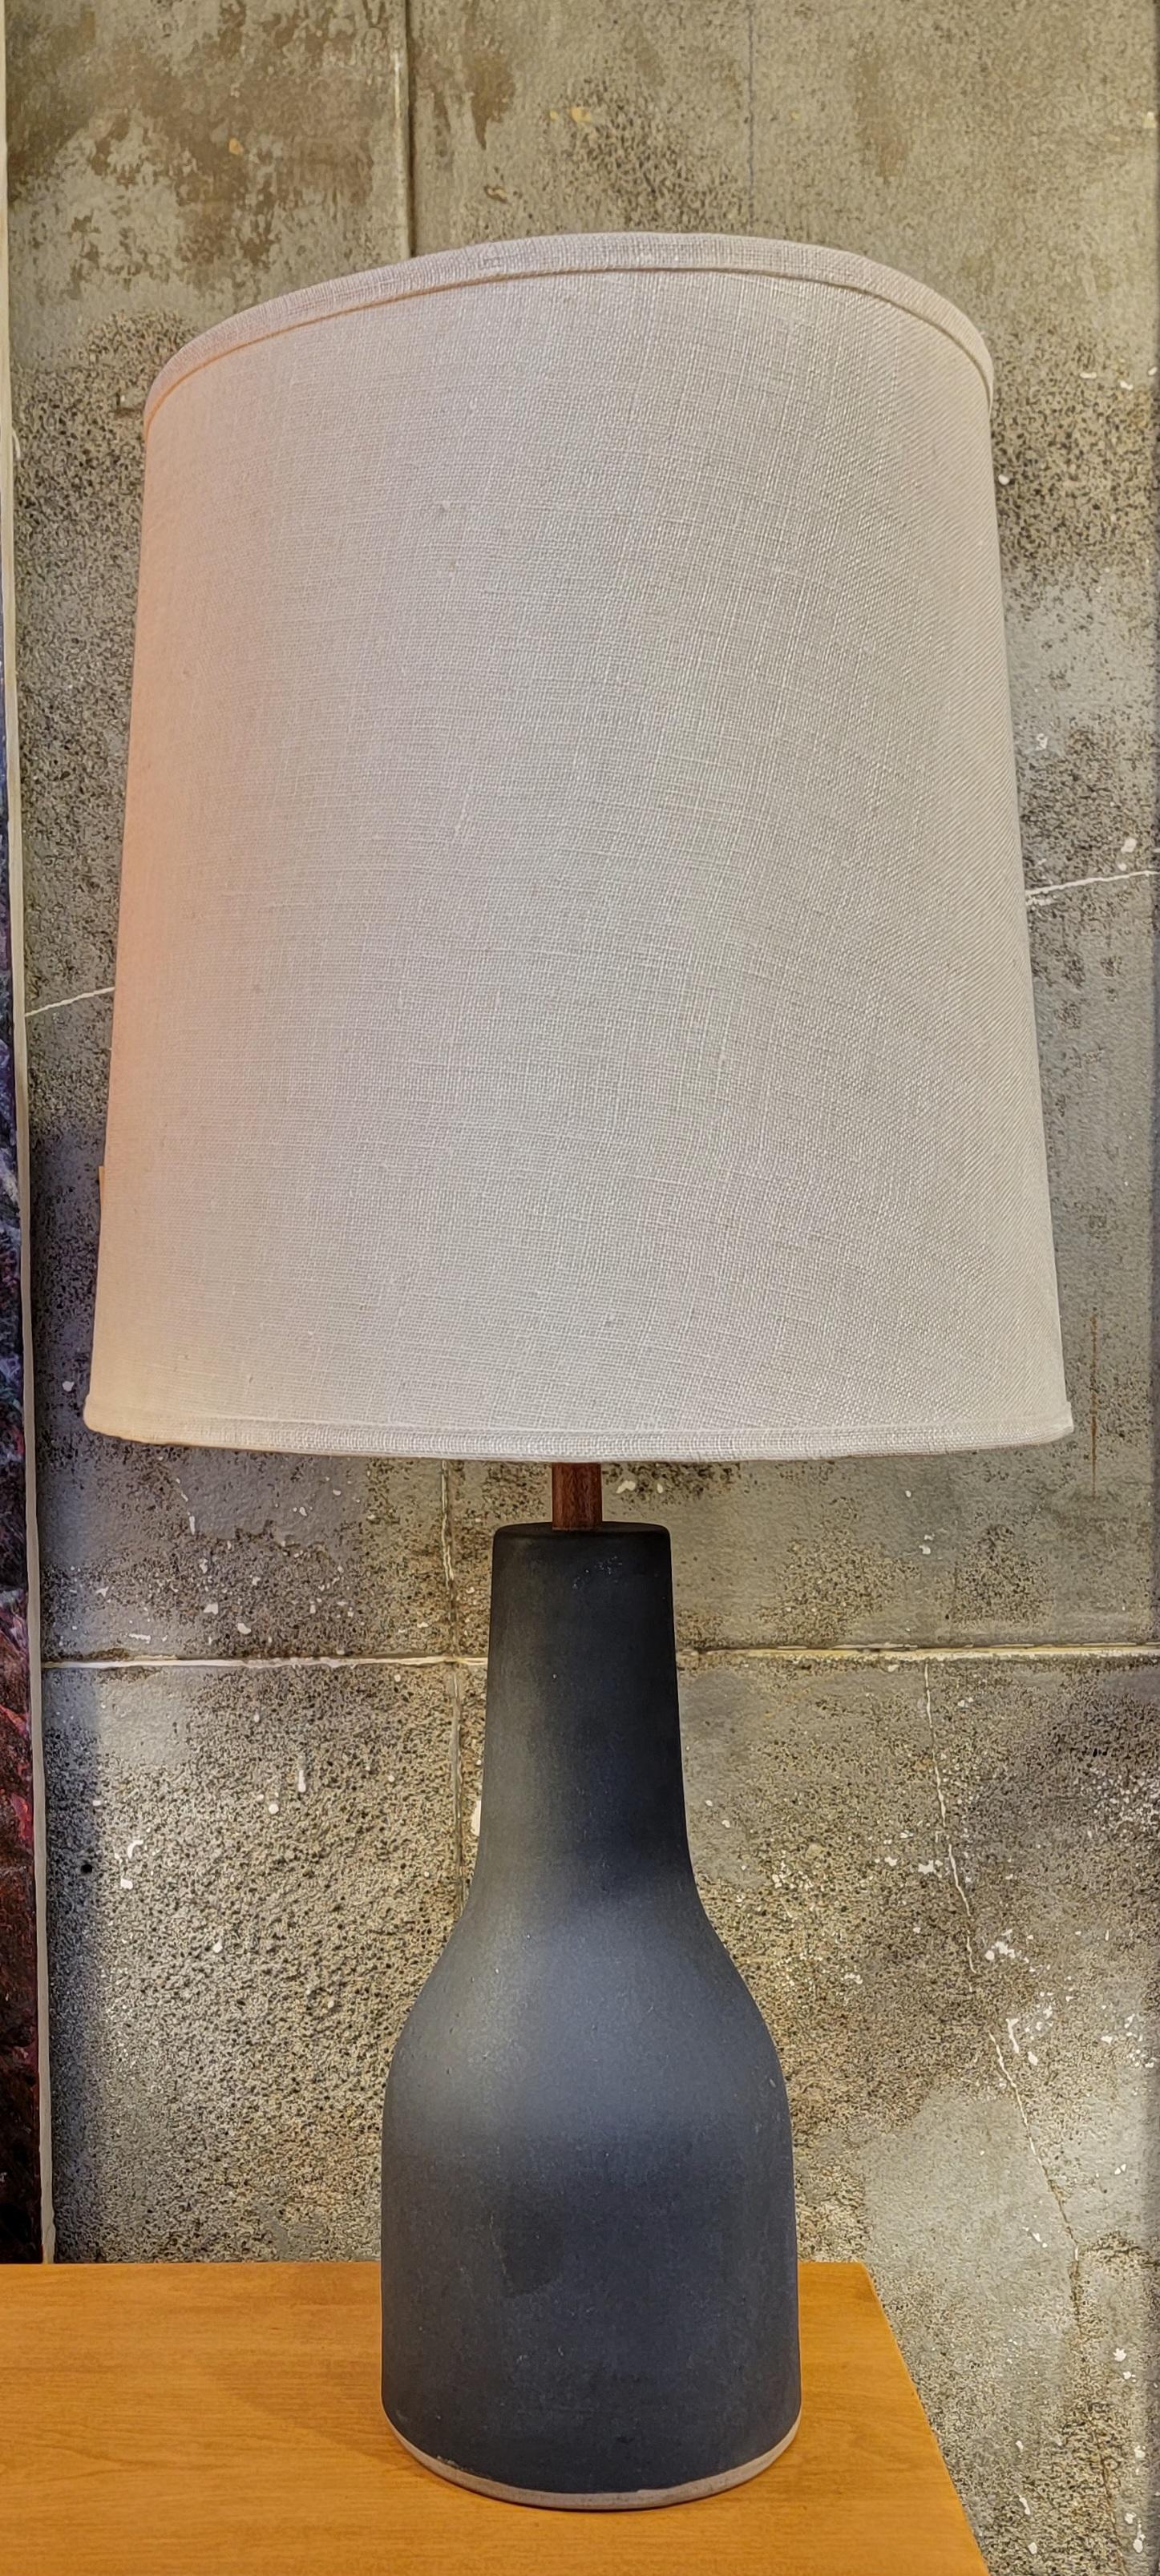 Matt gray glaze and teak accents on this signed Gordon & Jane Martz Table lamp. Original lamp shade and original teak wood finial. Incised 